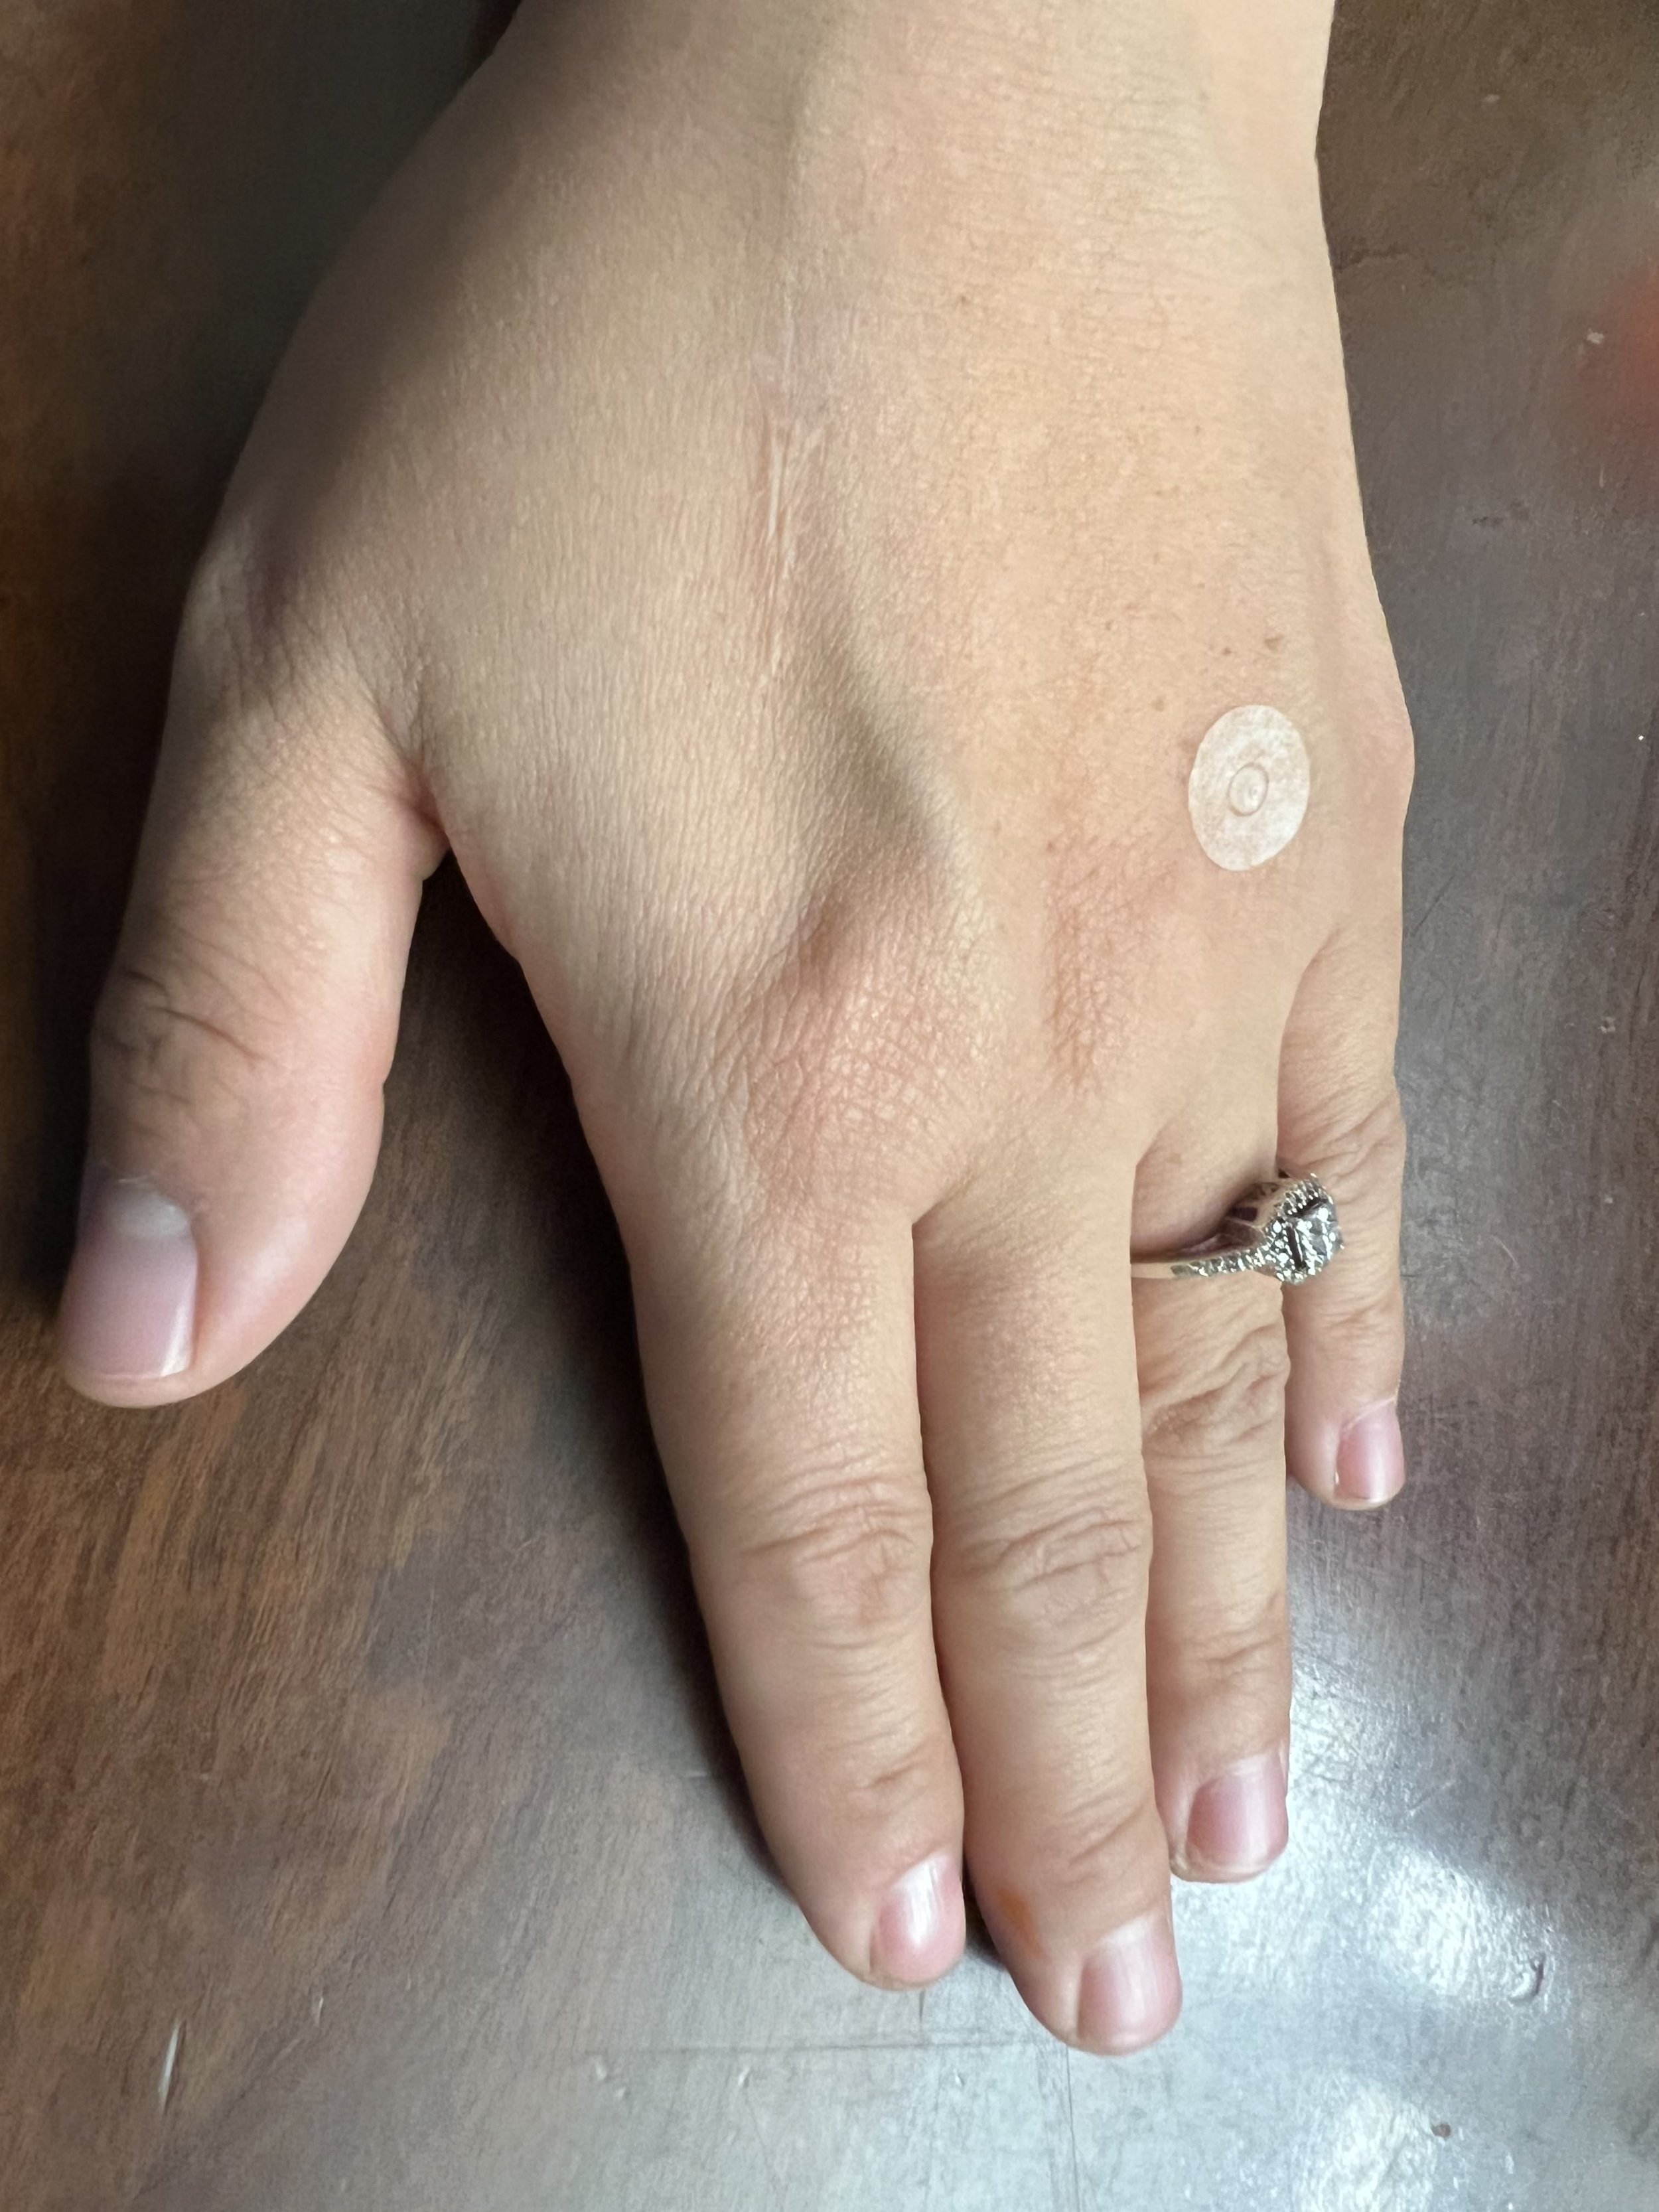 a Seirin transdermal needle on a hand